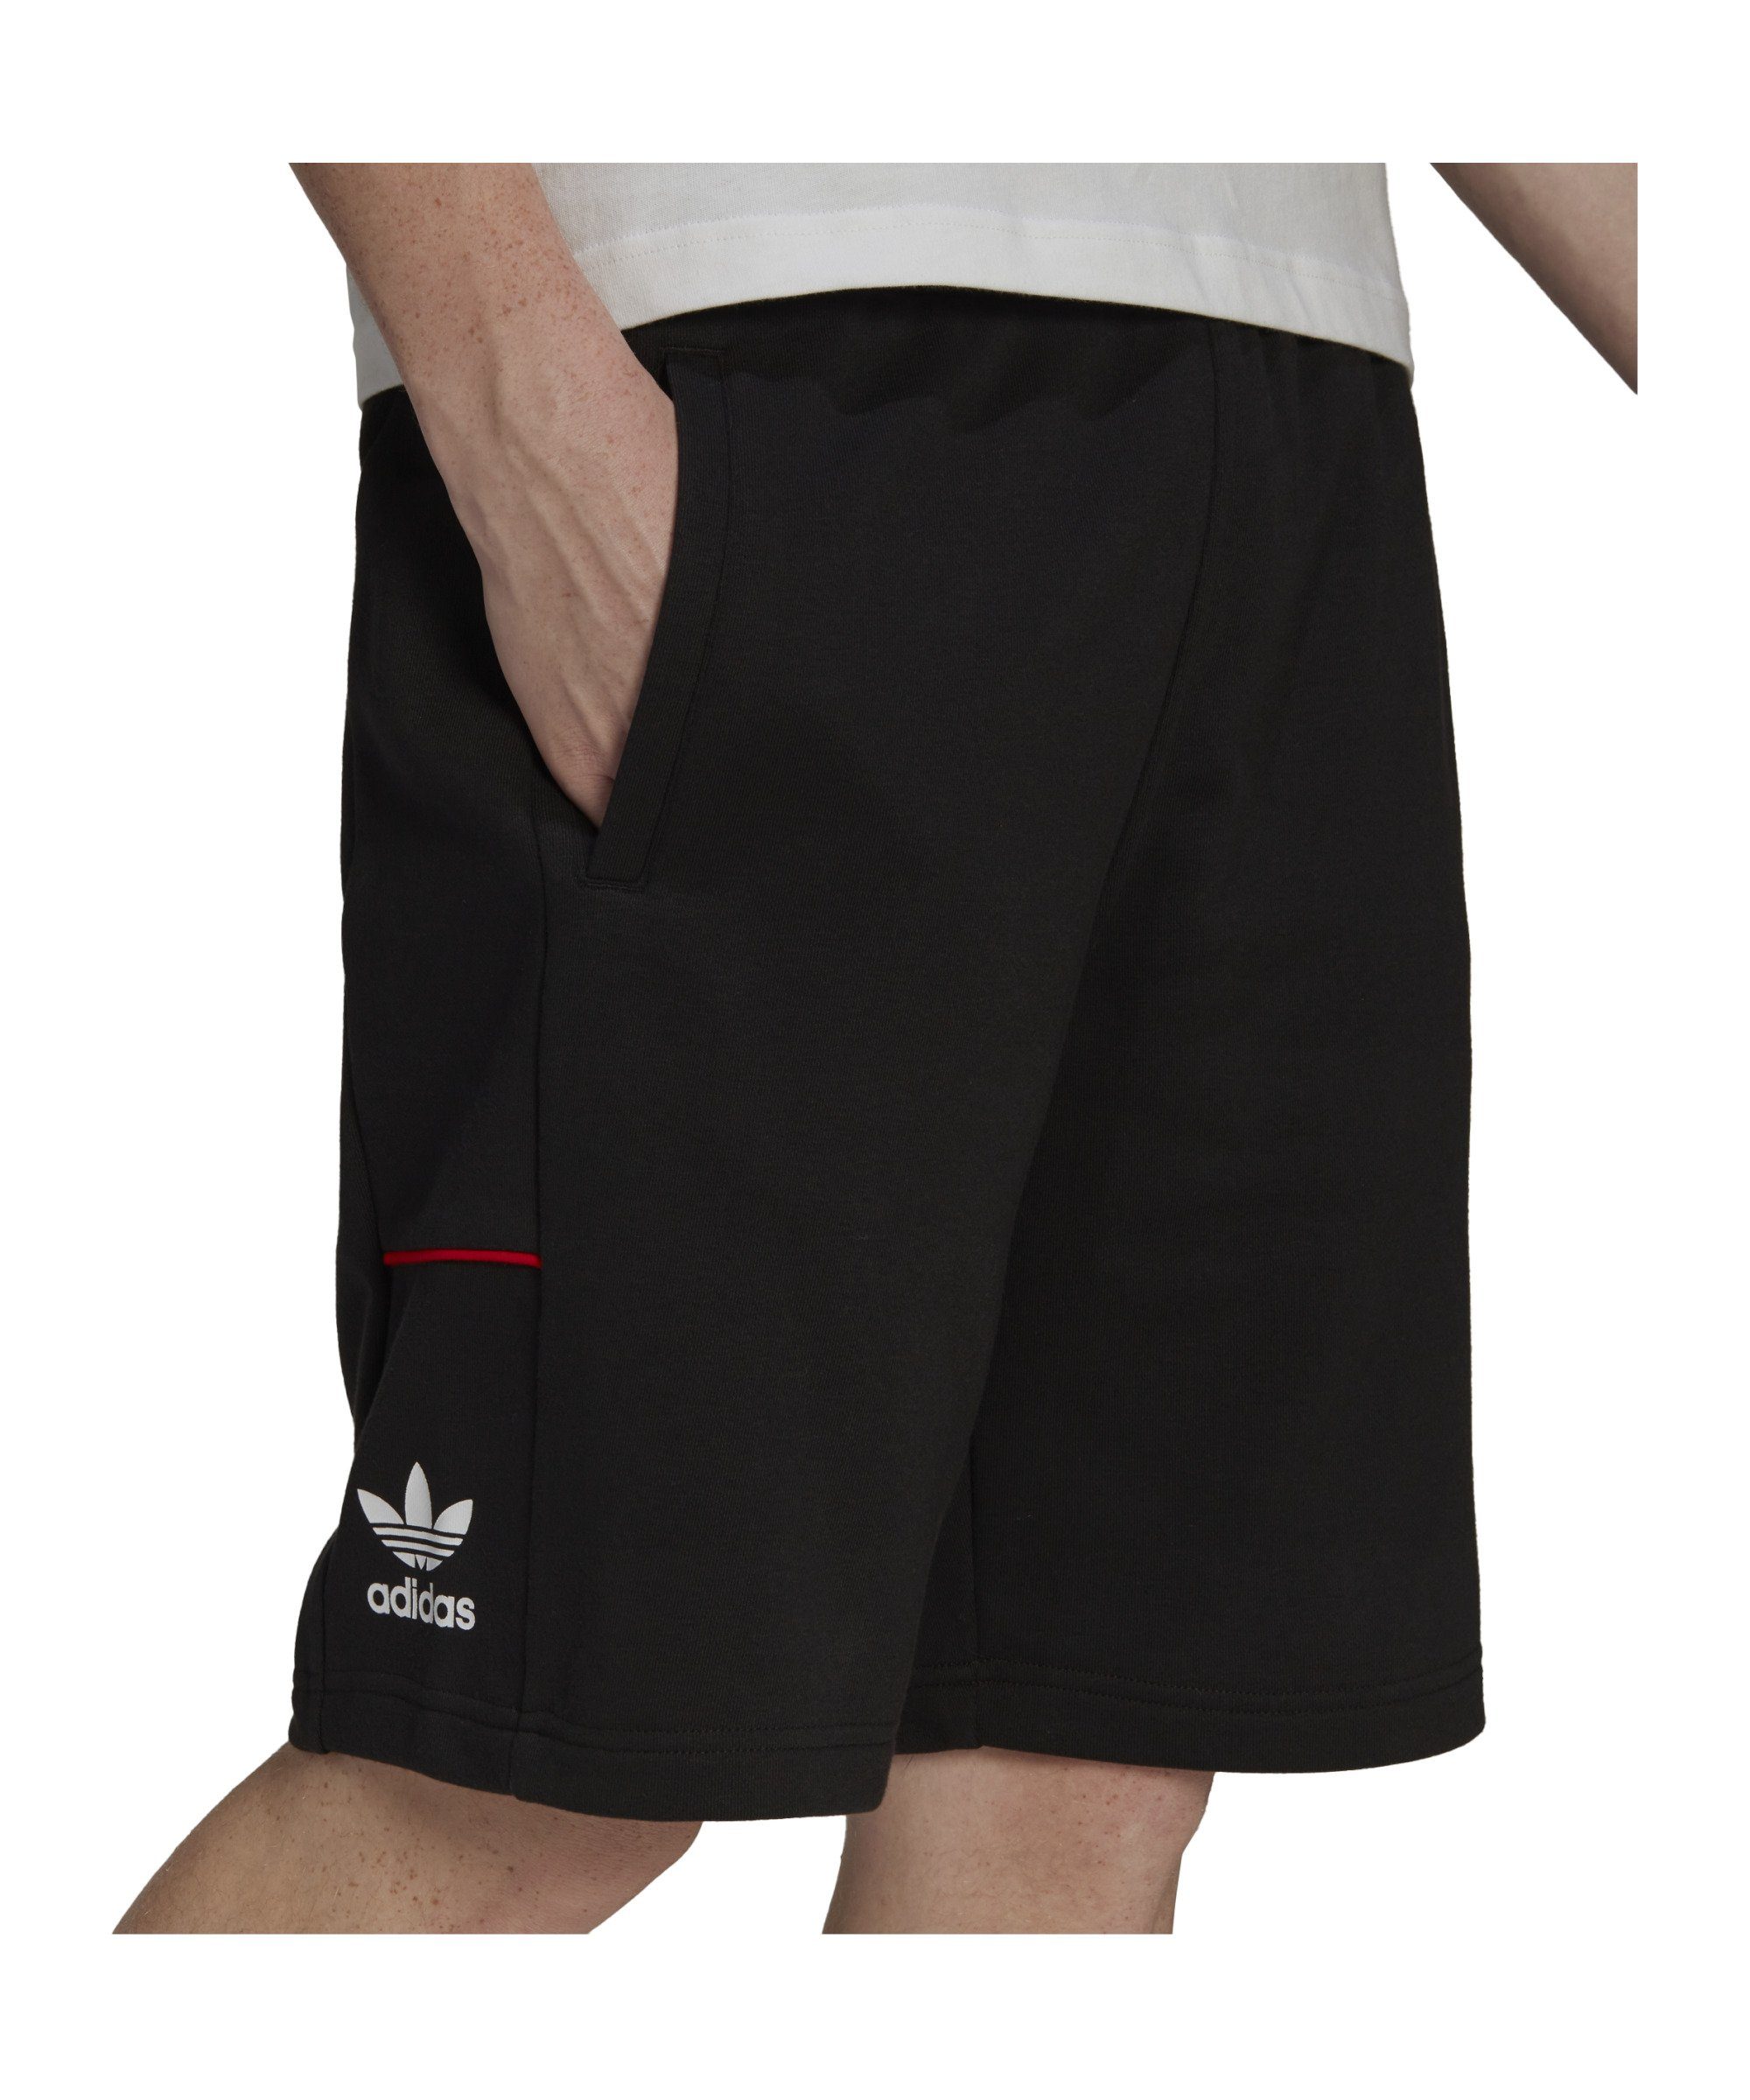 United Manchester Jogginghose Short adidas Originals